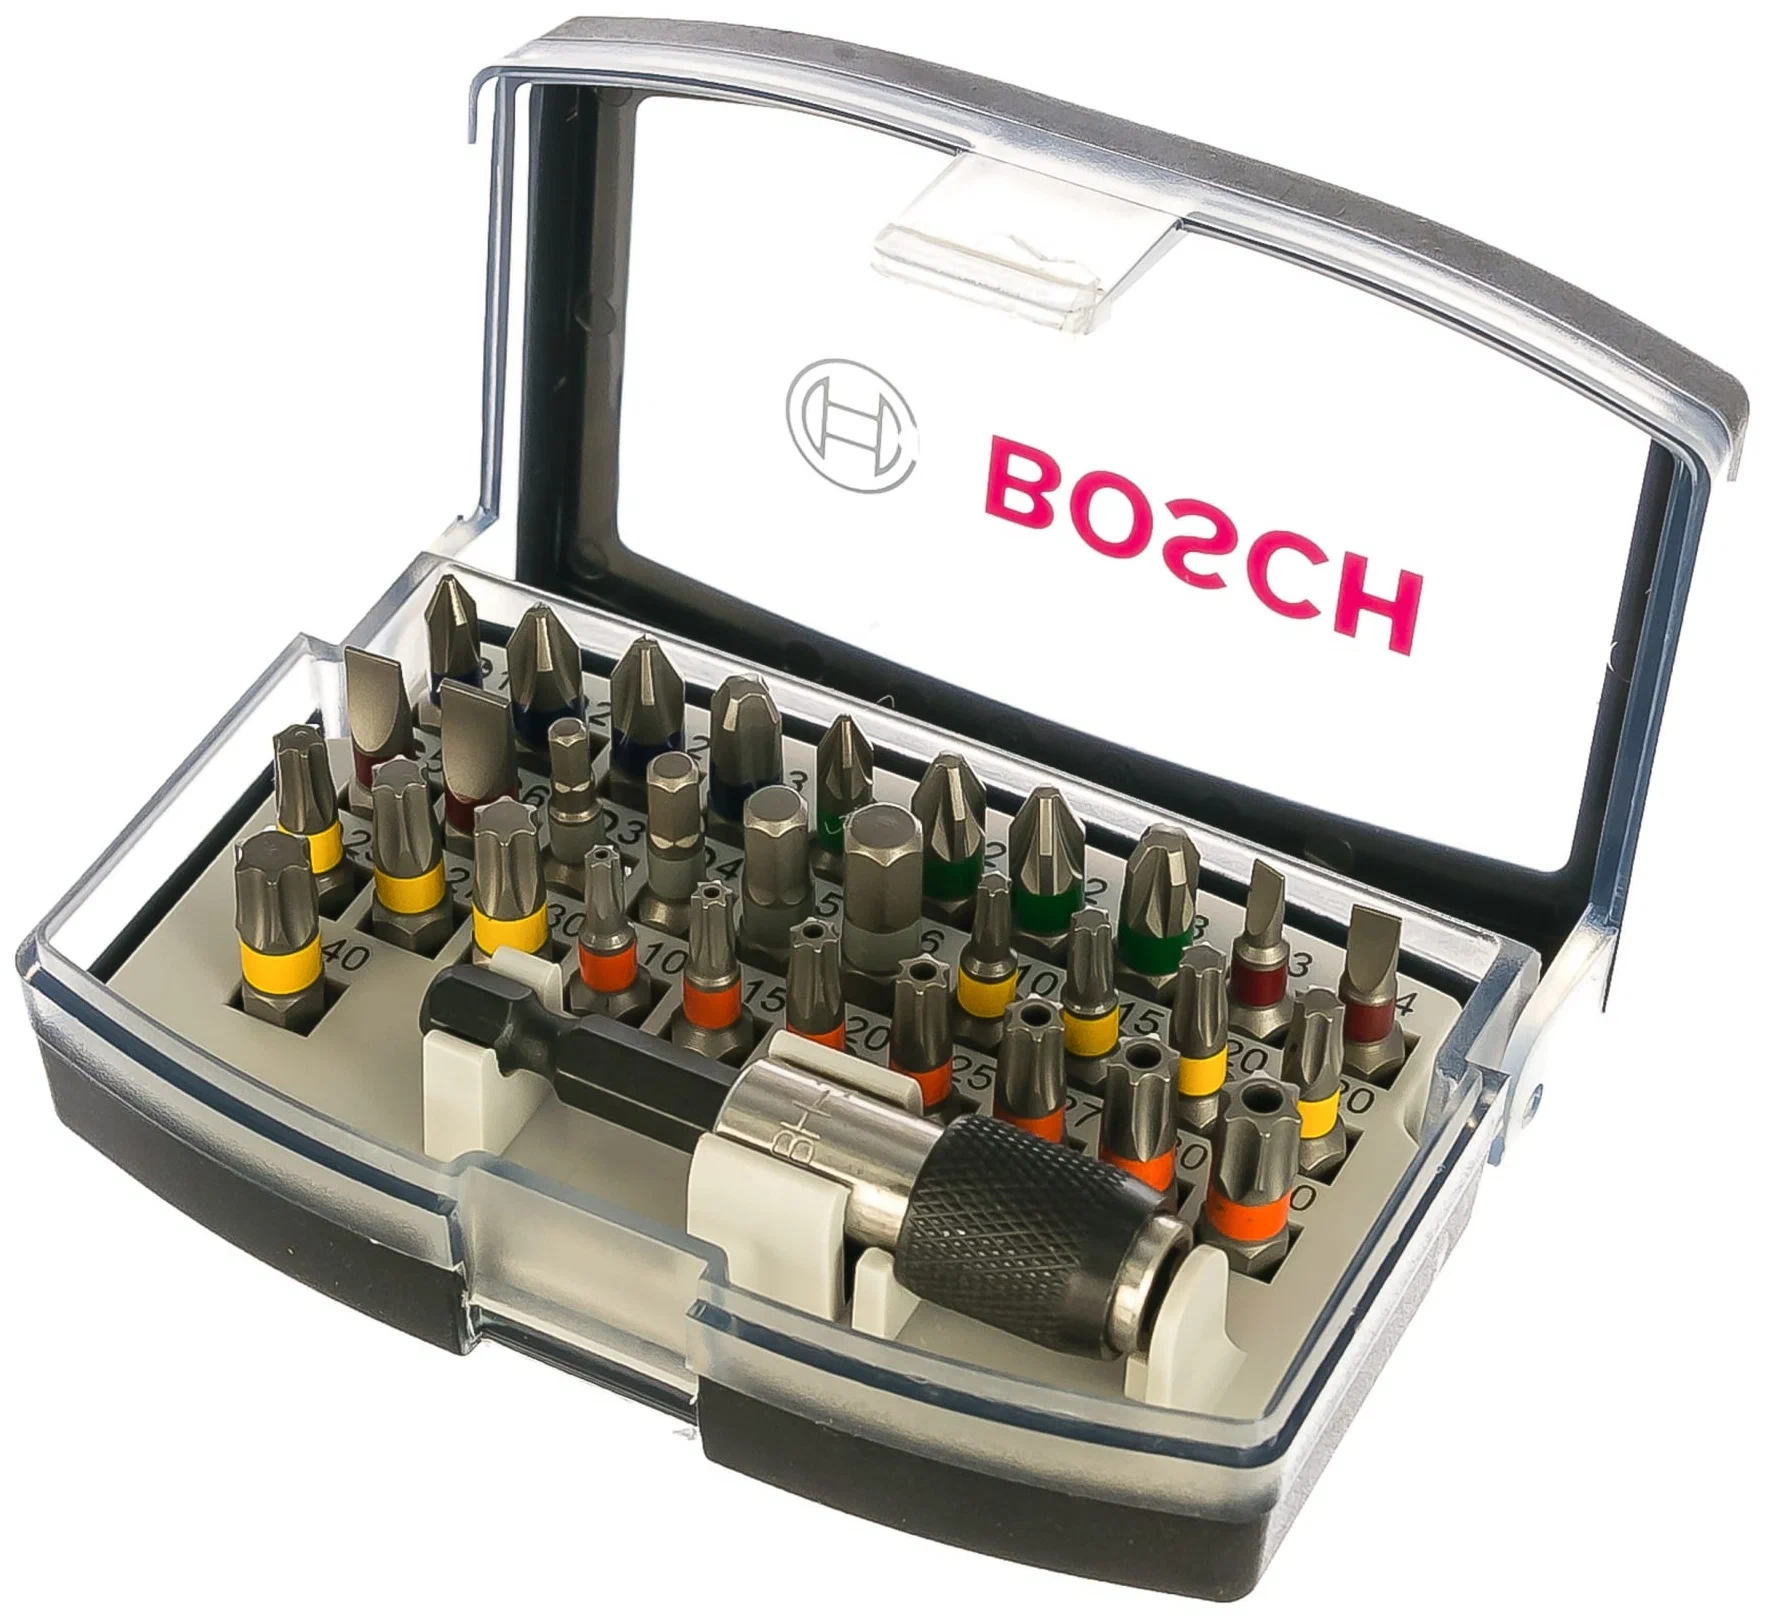 Набор бит 32шт PRO Bosch 2607017319